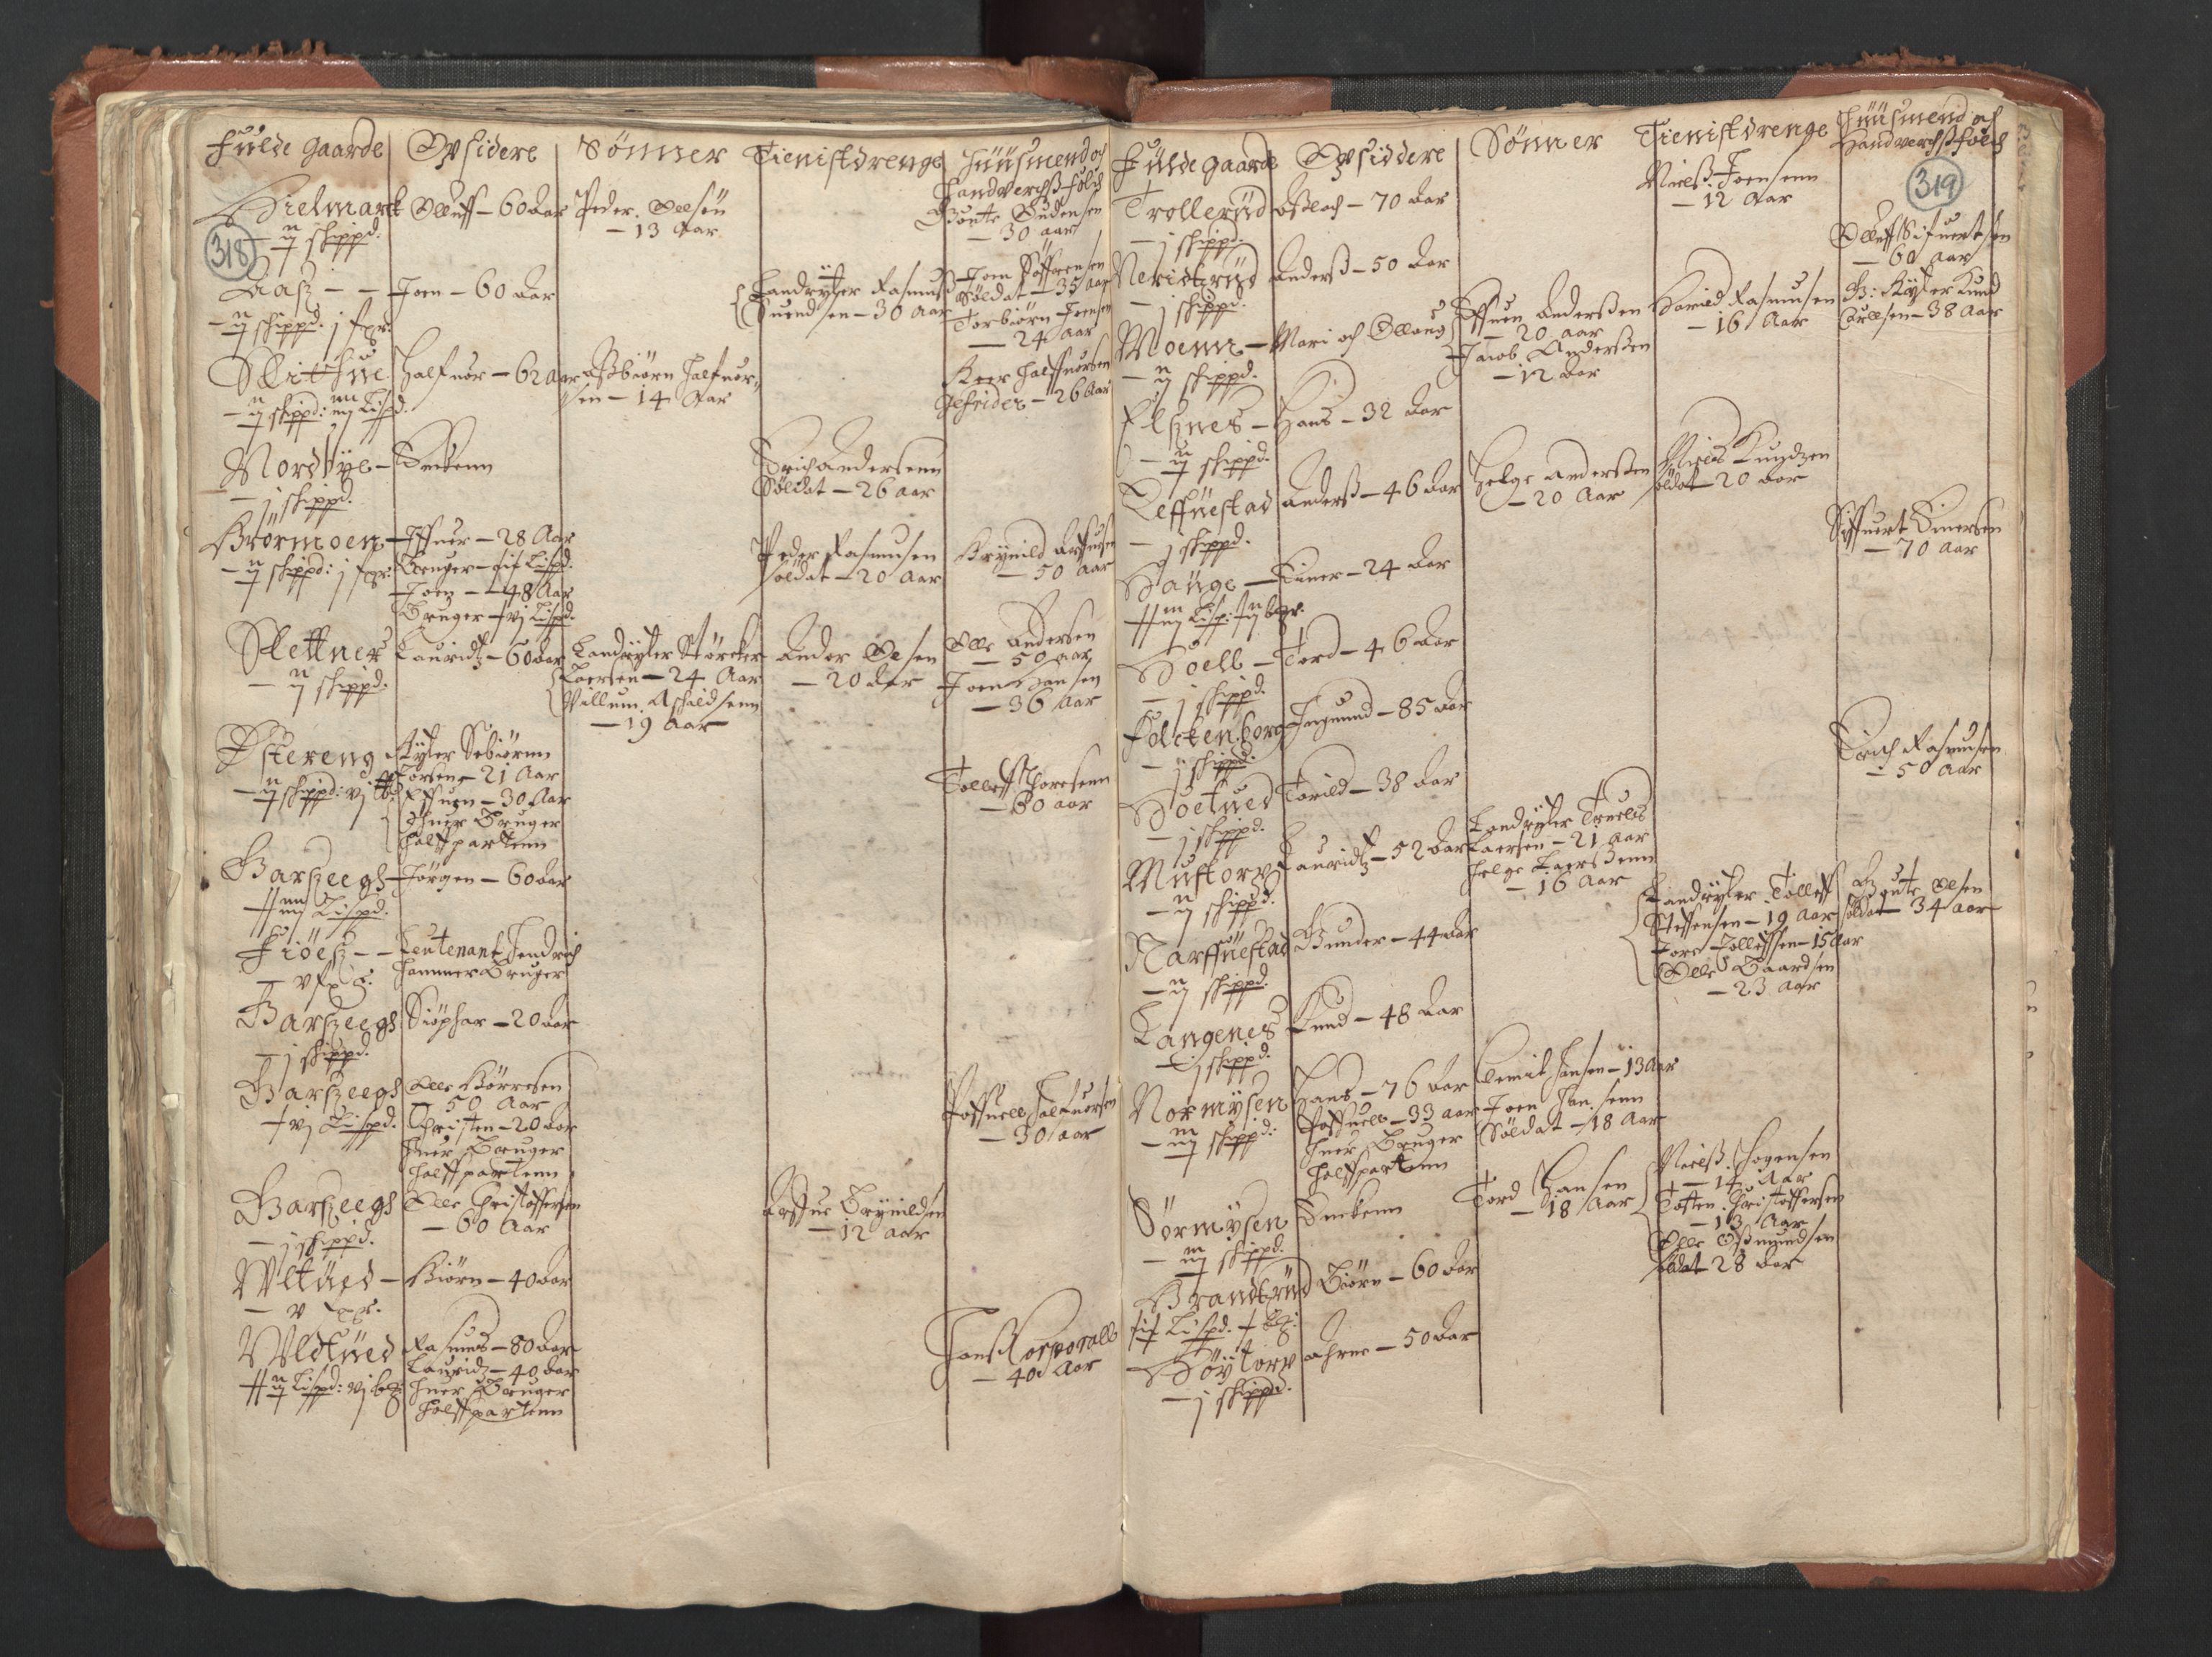 RA, Fogdenes og sorenskrivernes manntall 1664-1666, nr. 1: Fogderier (len og skipreider) i nåværende Østfold fylke, 1664, s. 318-319